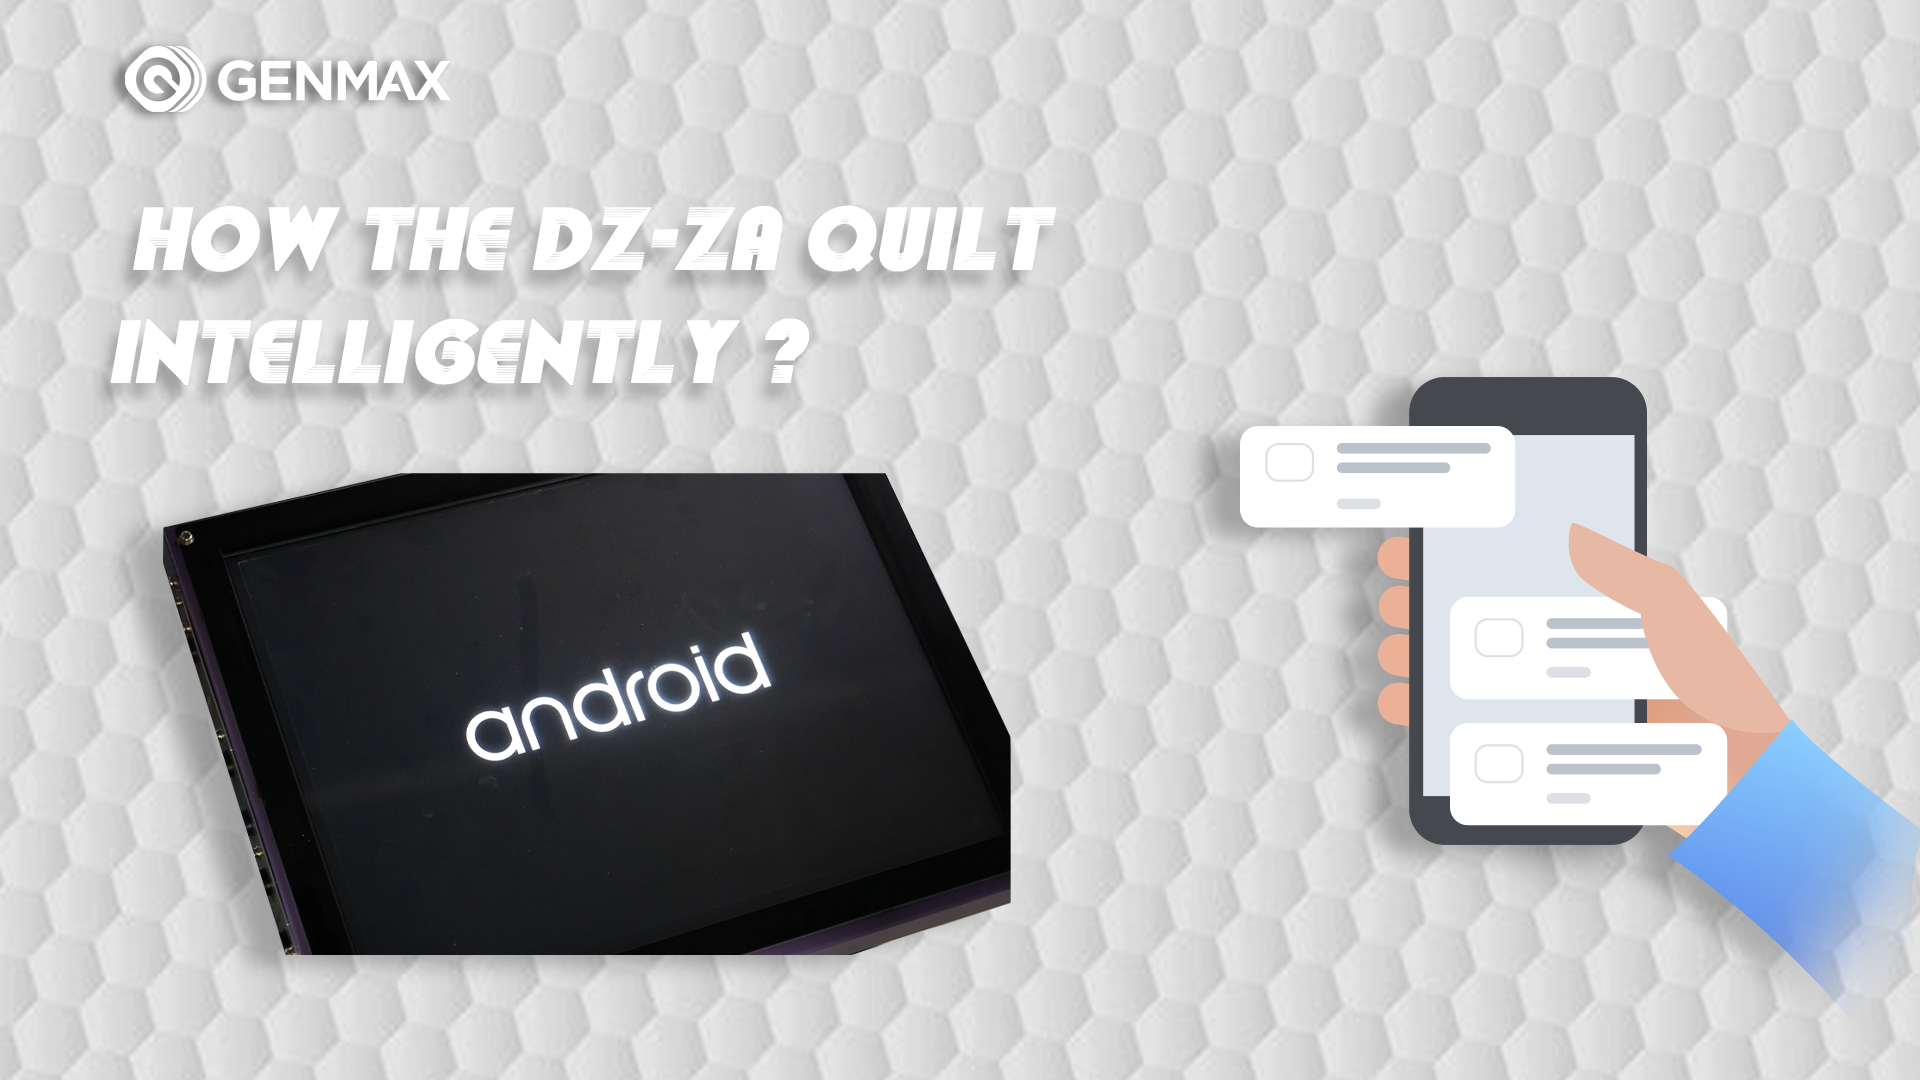 How the DZ-ZA Quilt Intelligently ?